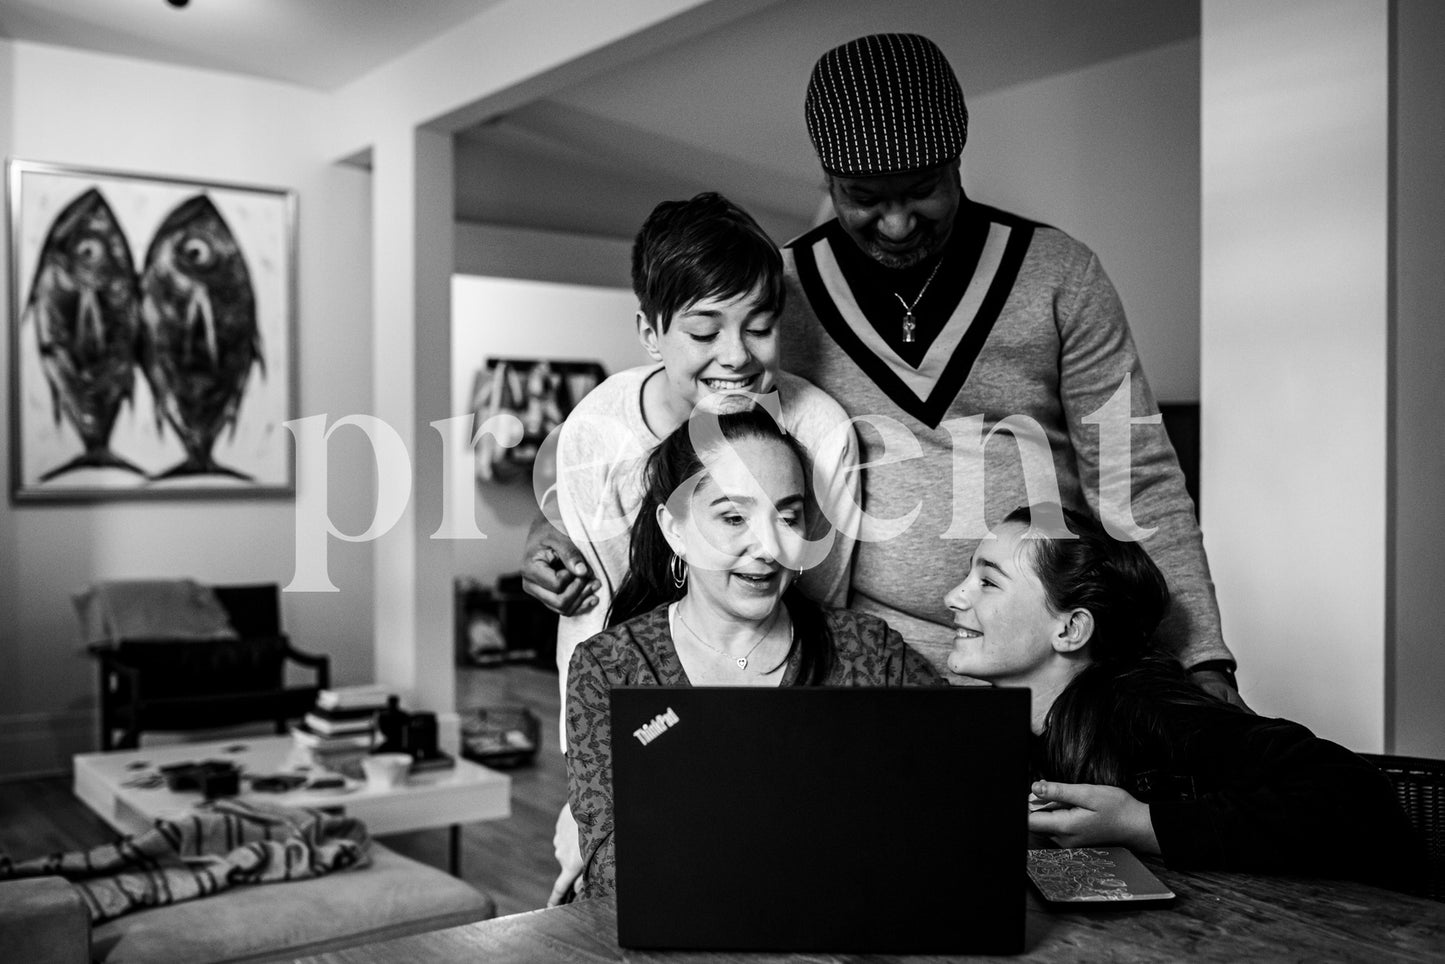 Family gathered around a laptop